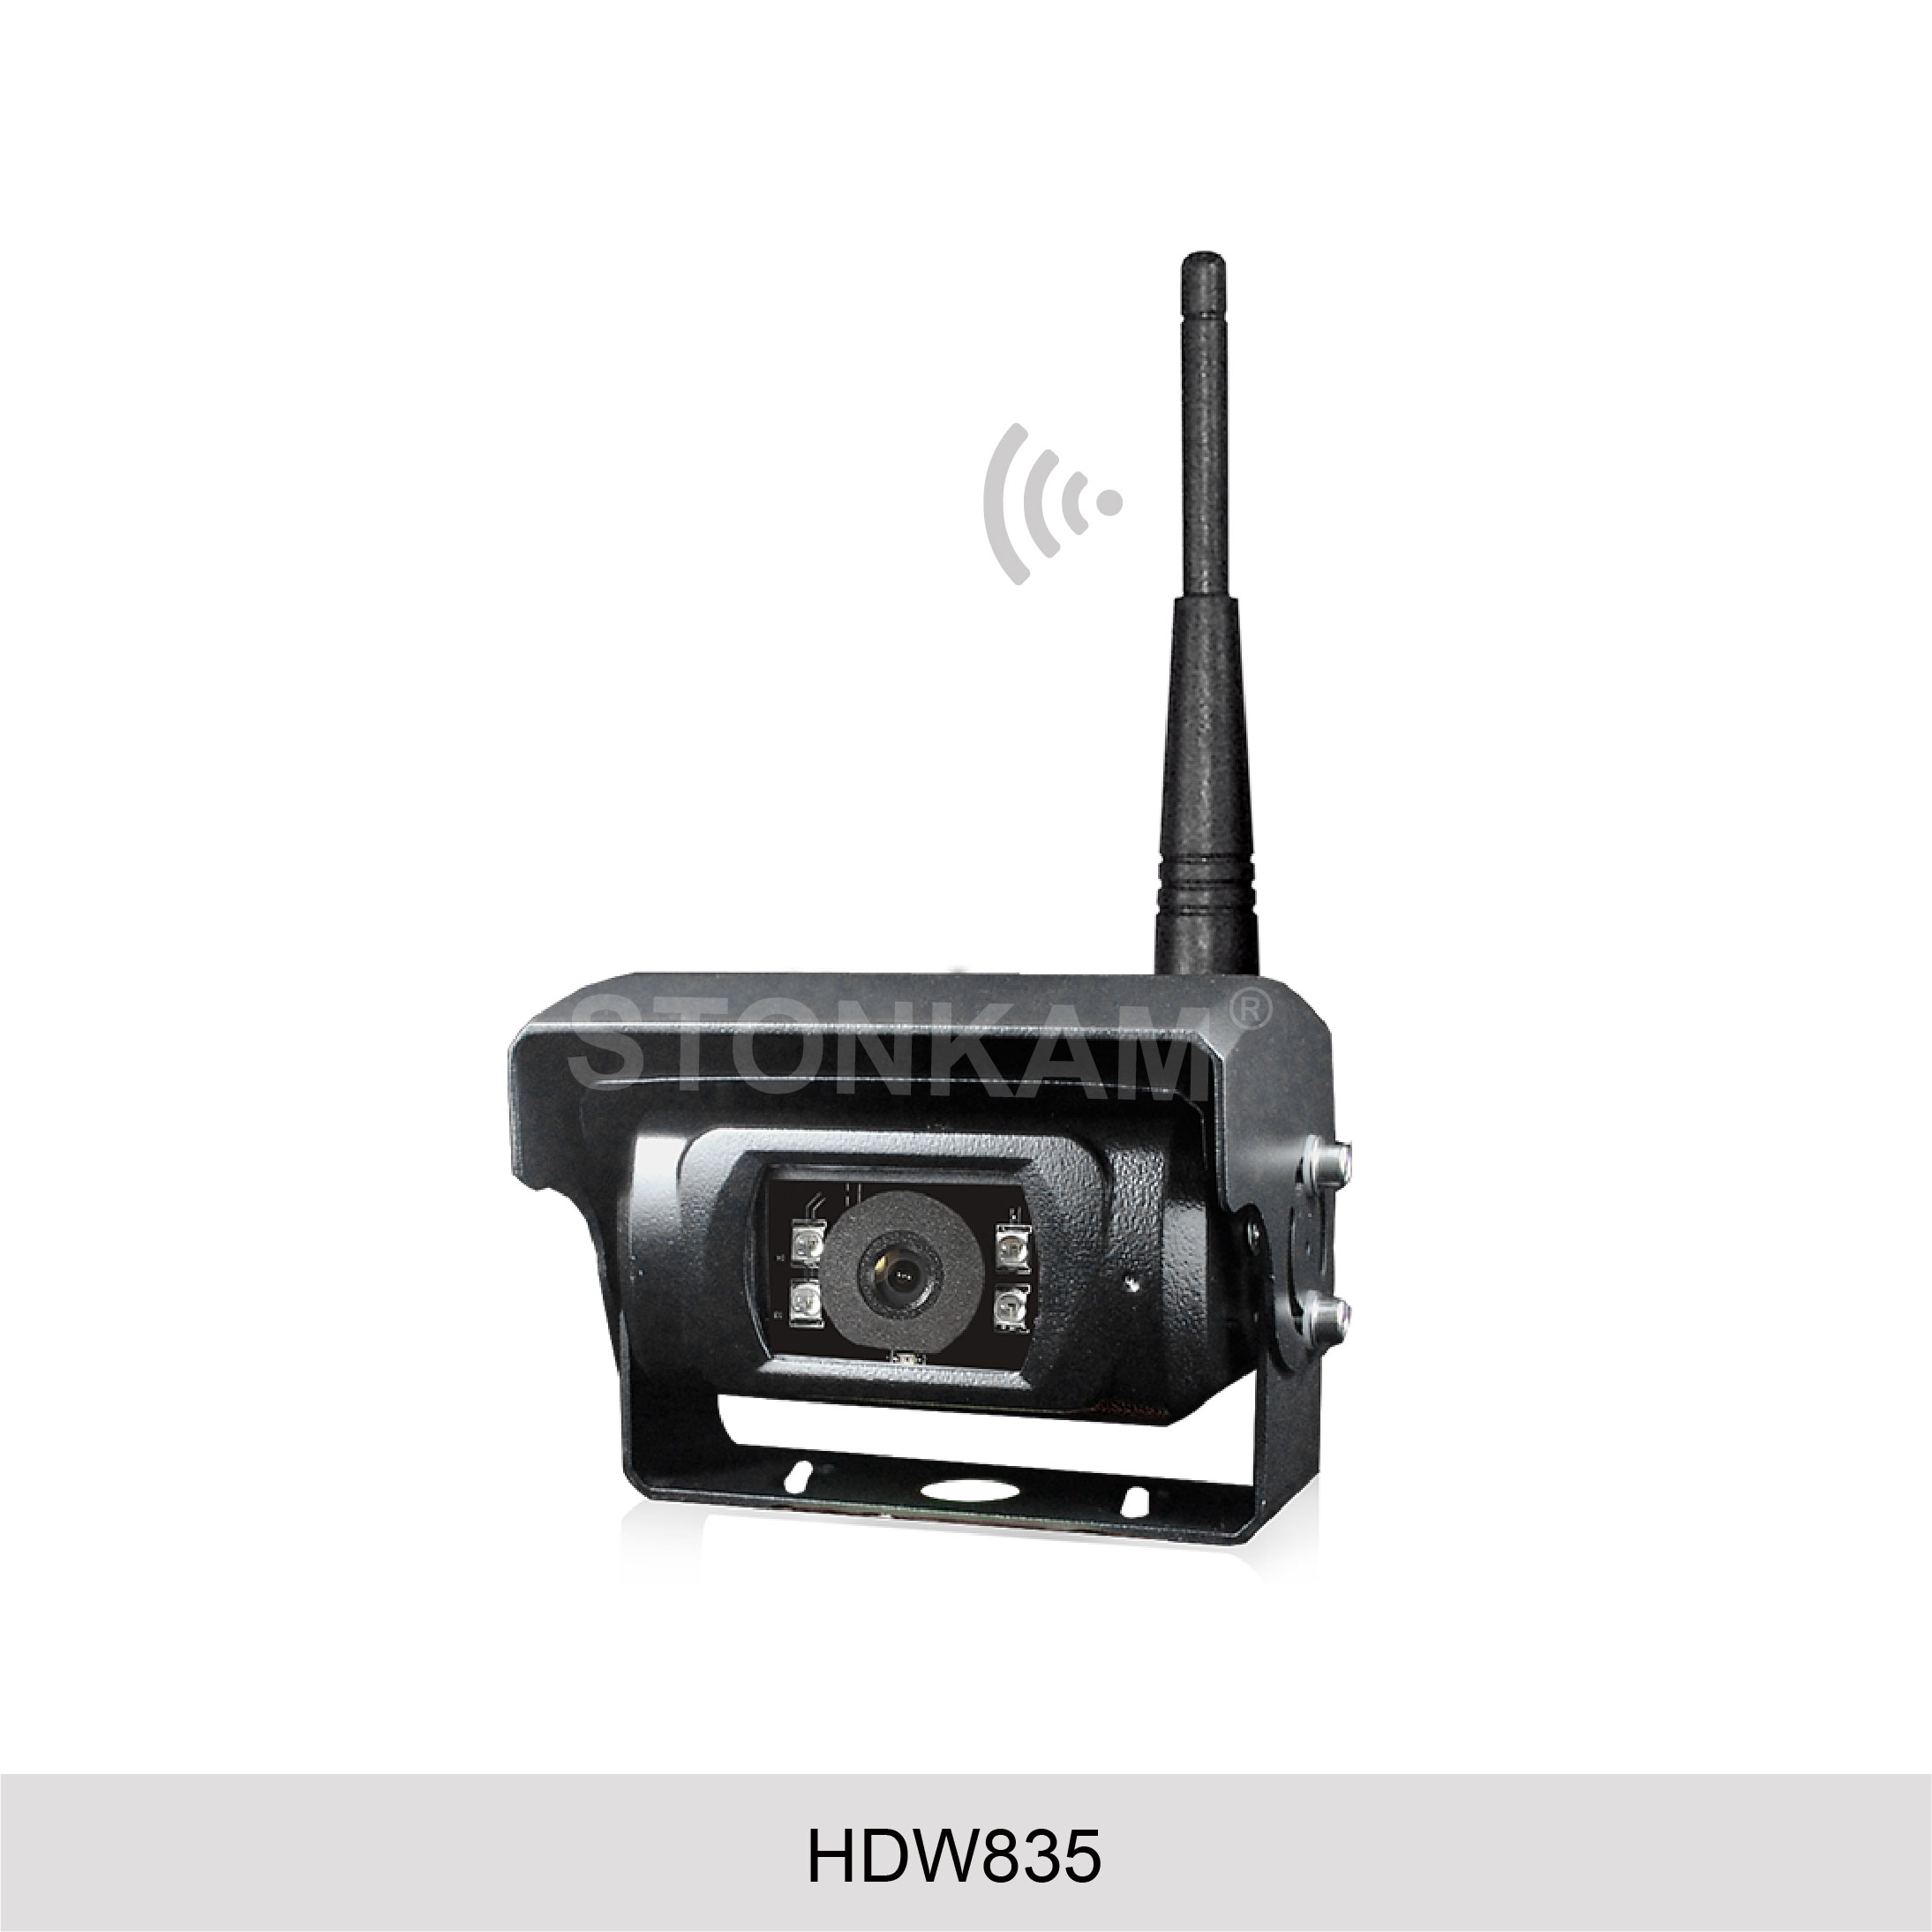 2.4GHz 1080P Digital Wireless Backup Camera with Auto Shutter